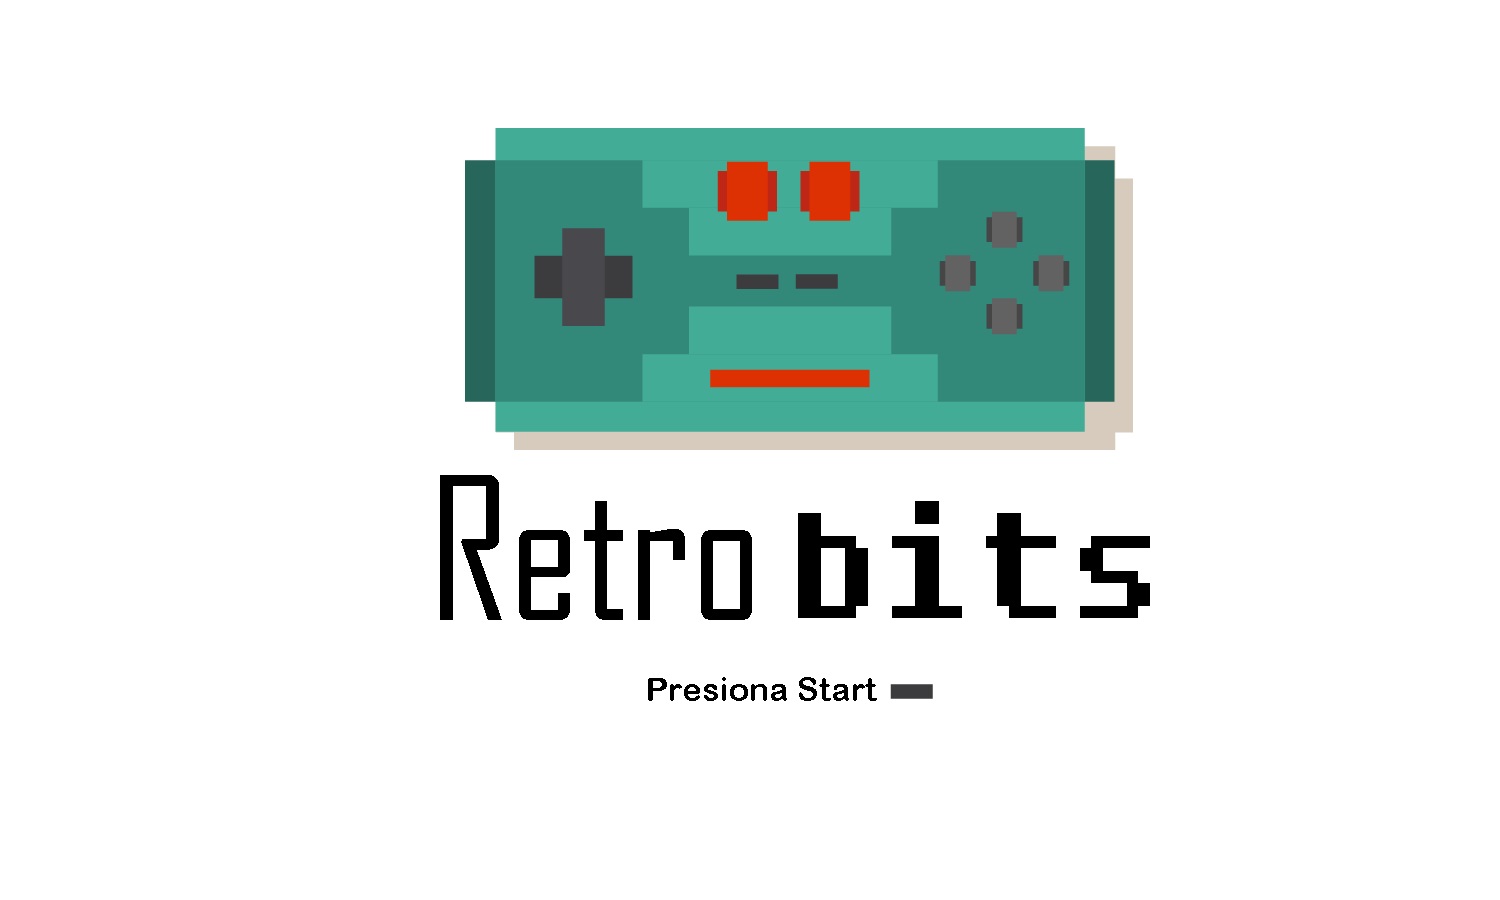 Retro bits - 23 de septiembre de 2019